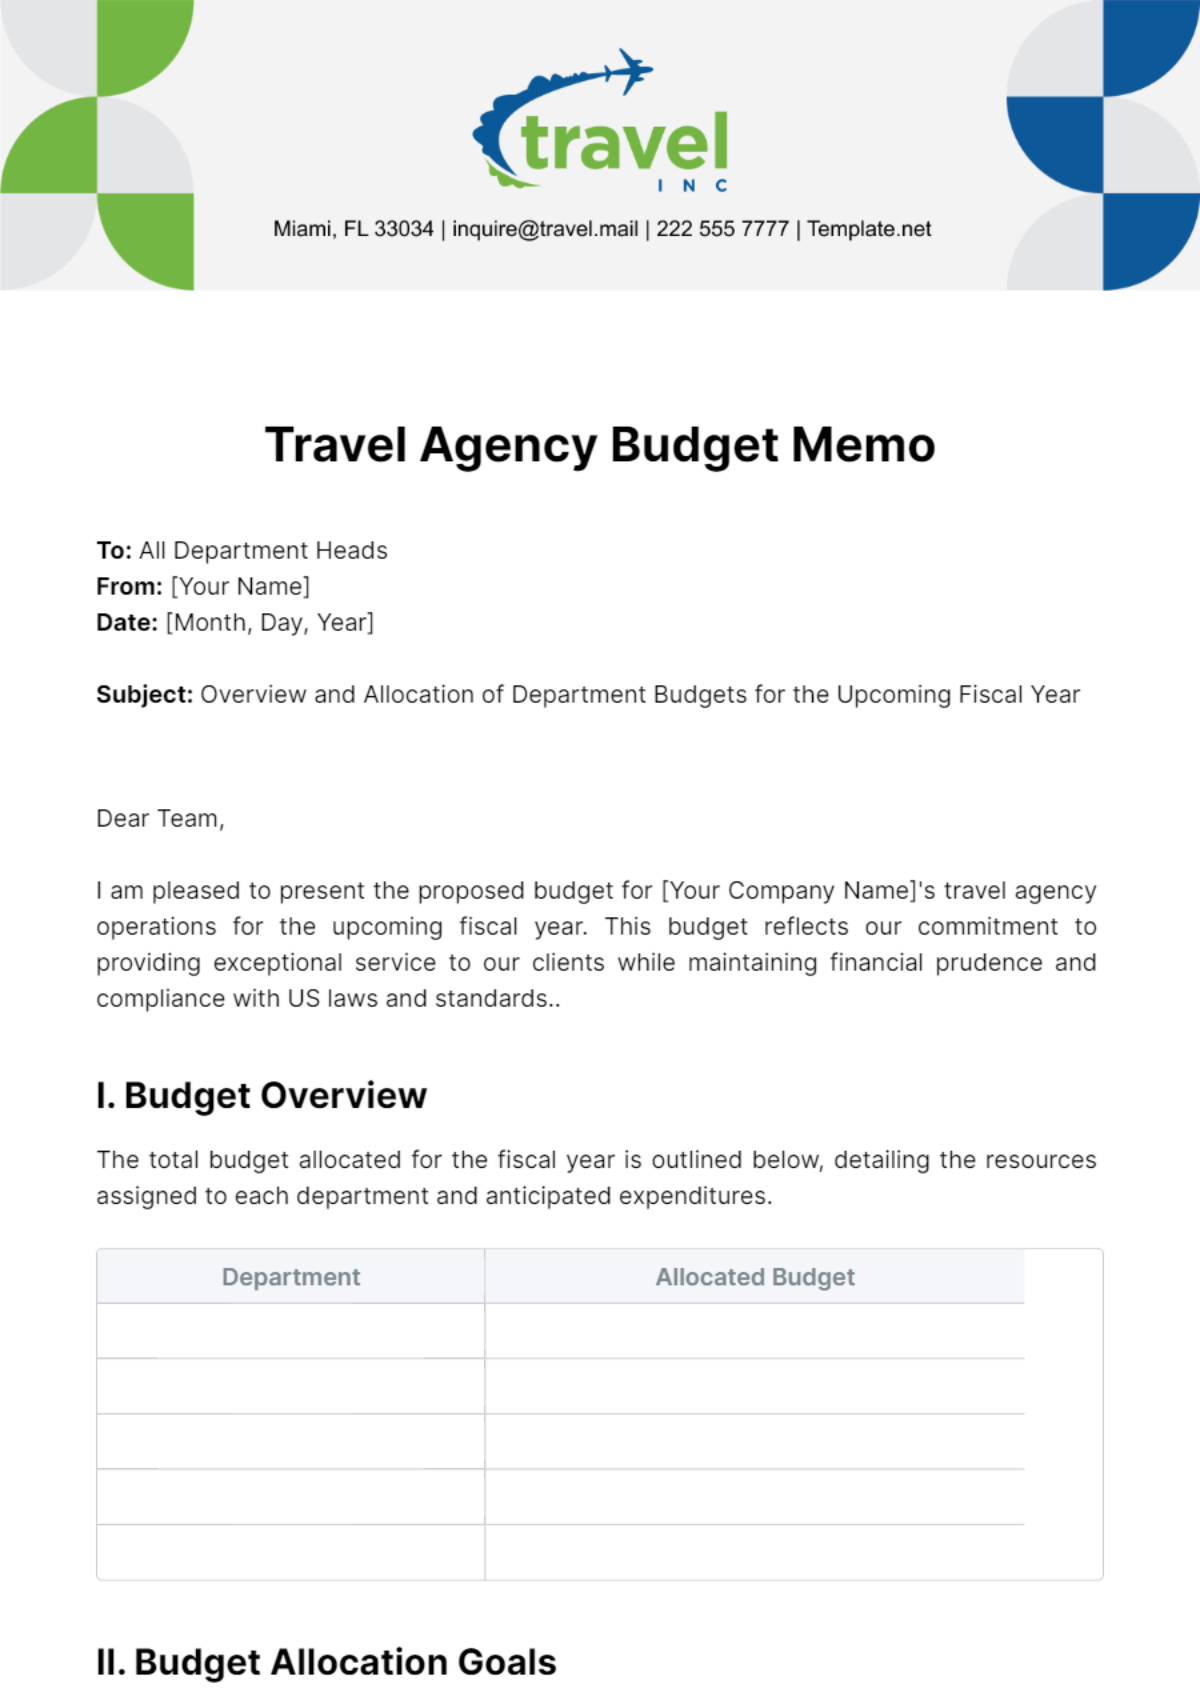 Travel Agency Budget Memo Template